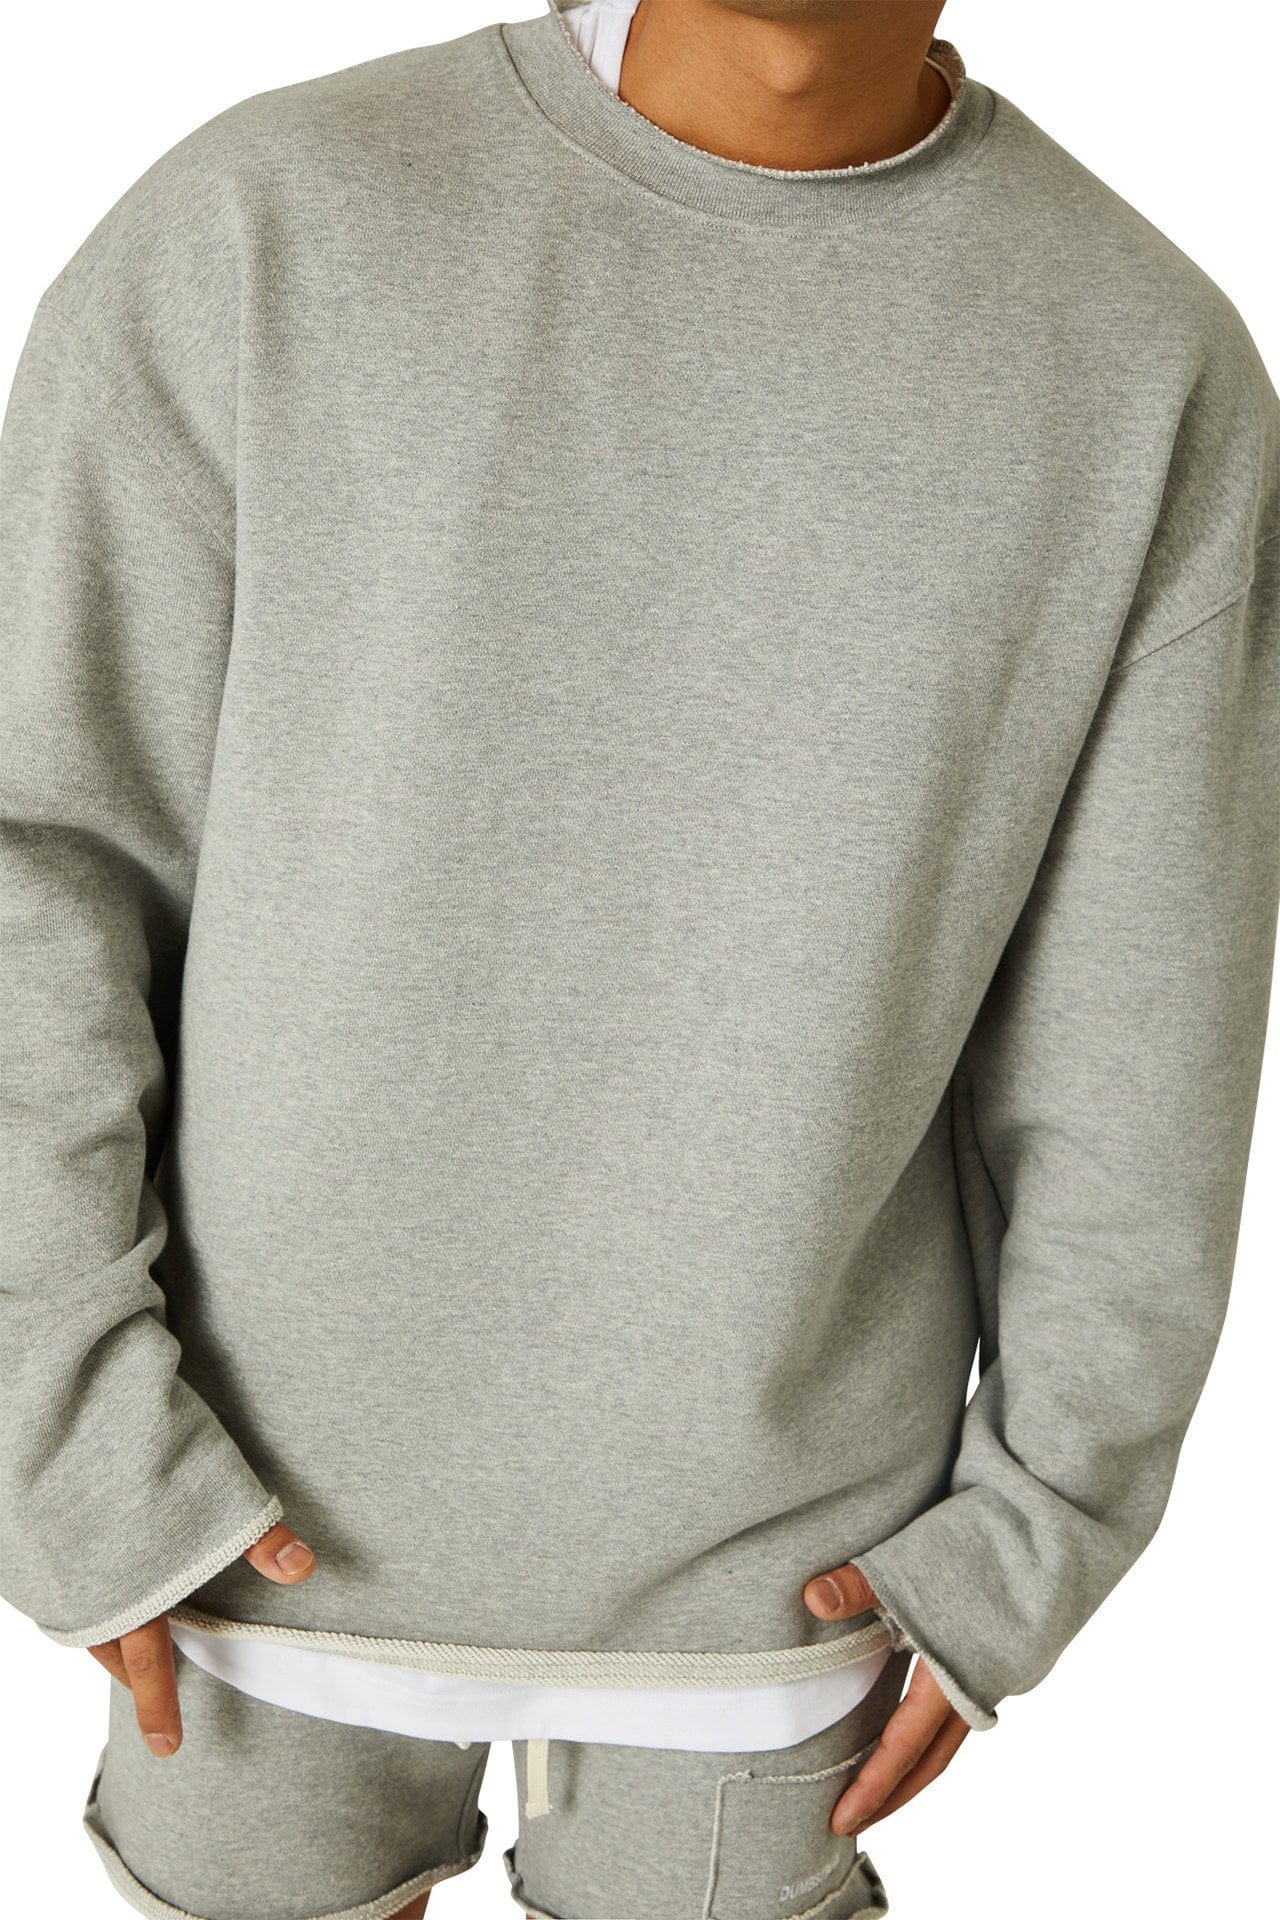 Gym warmup sweatshirt Grey